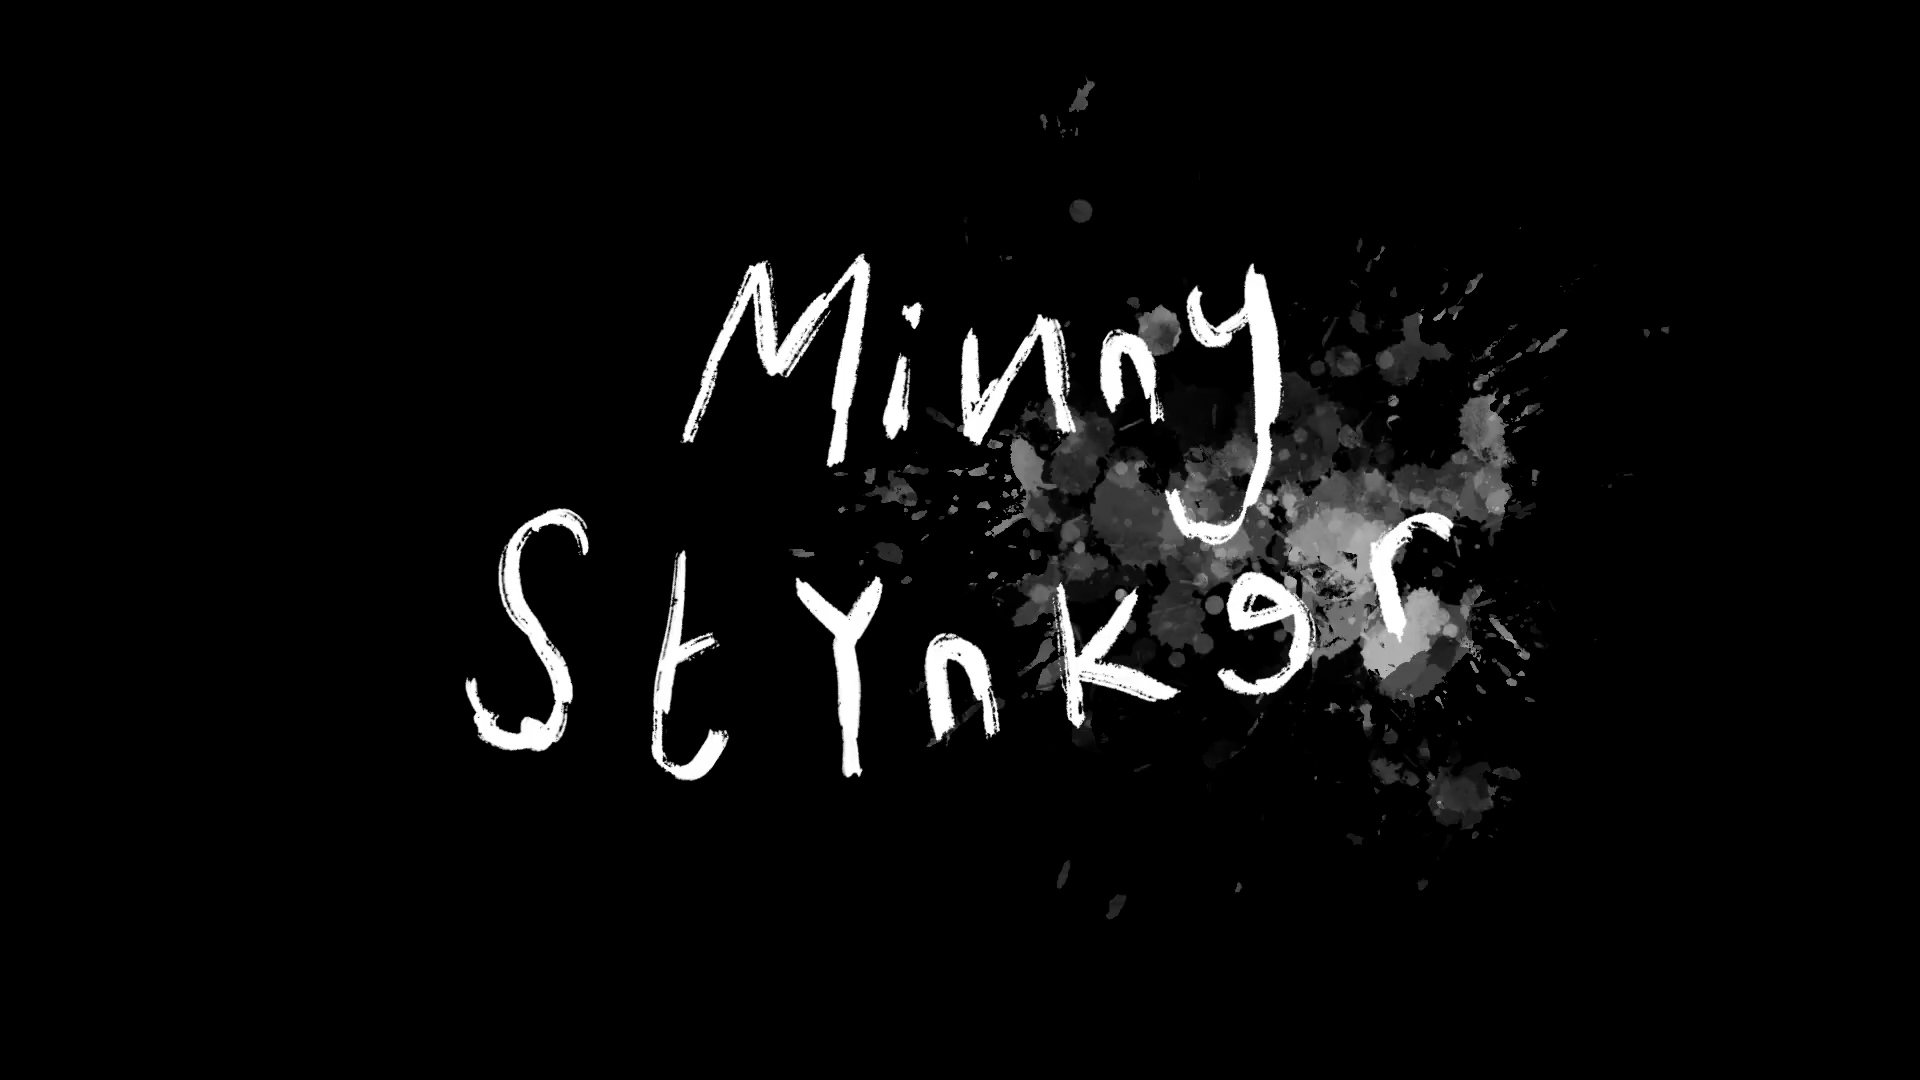 Minny Stynker AR experience